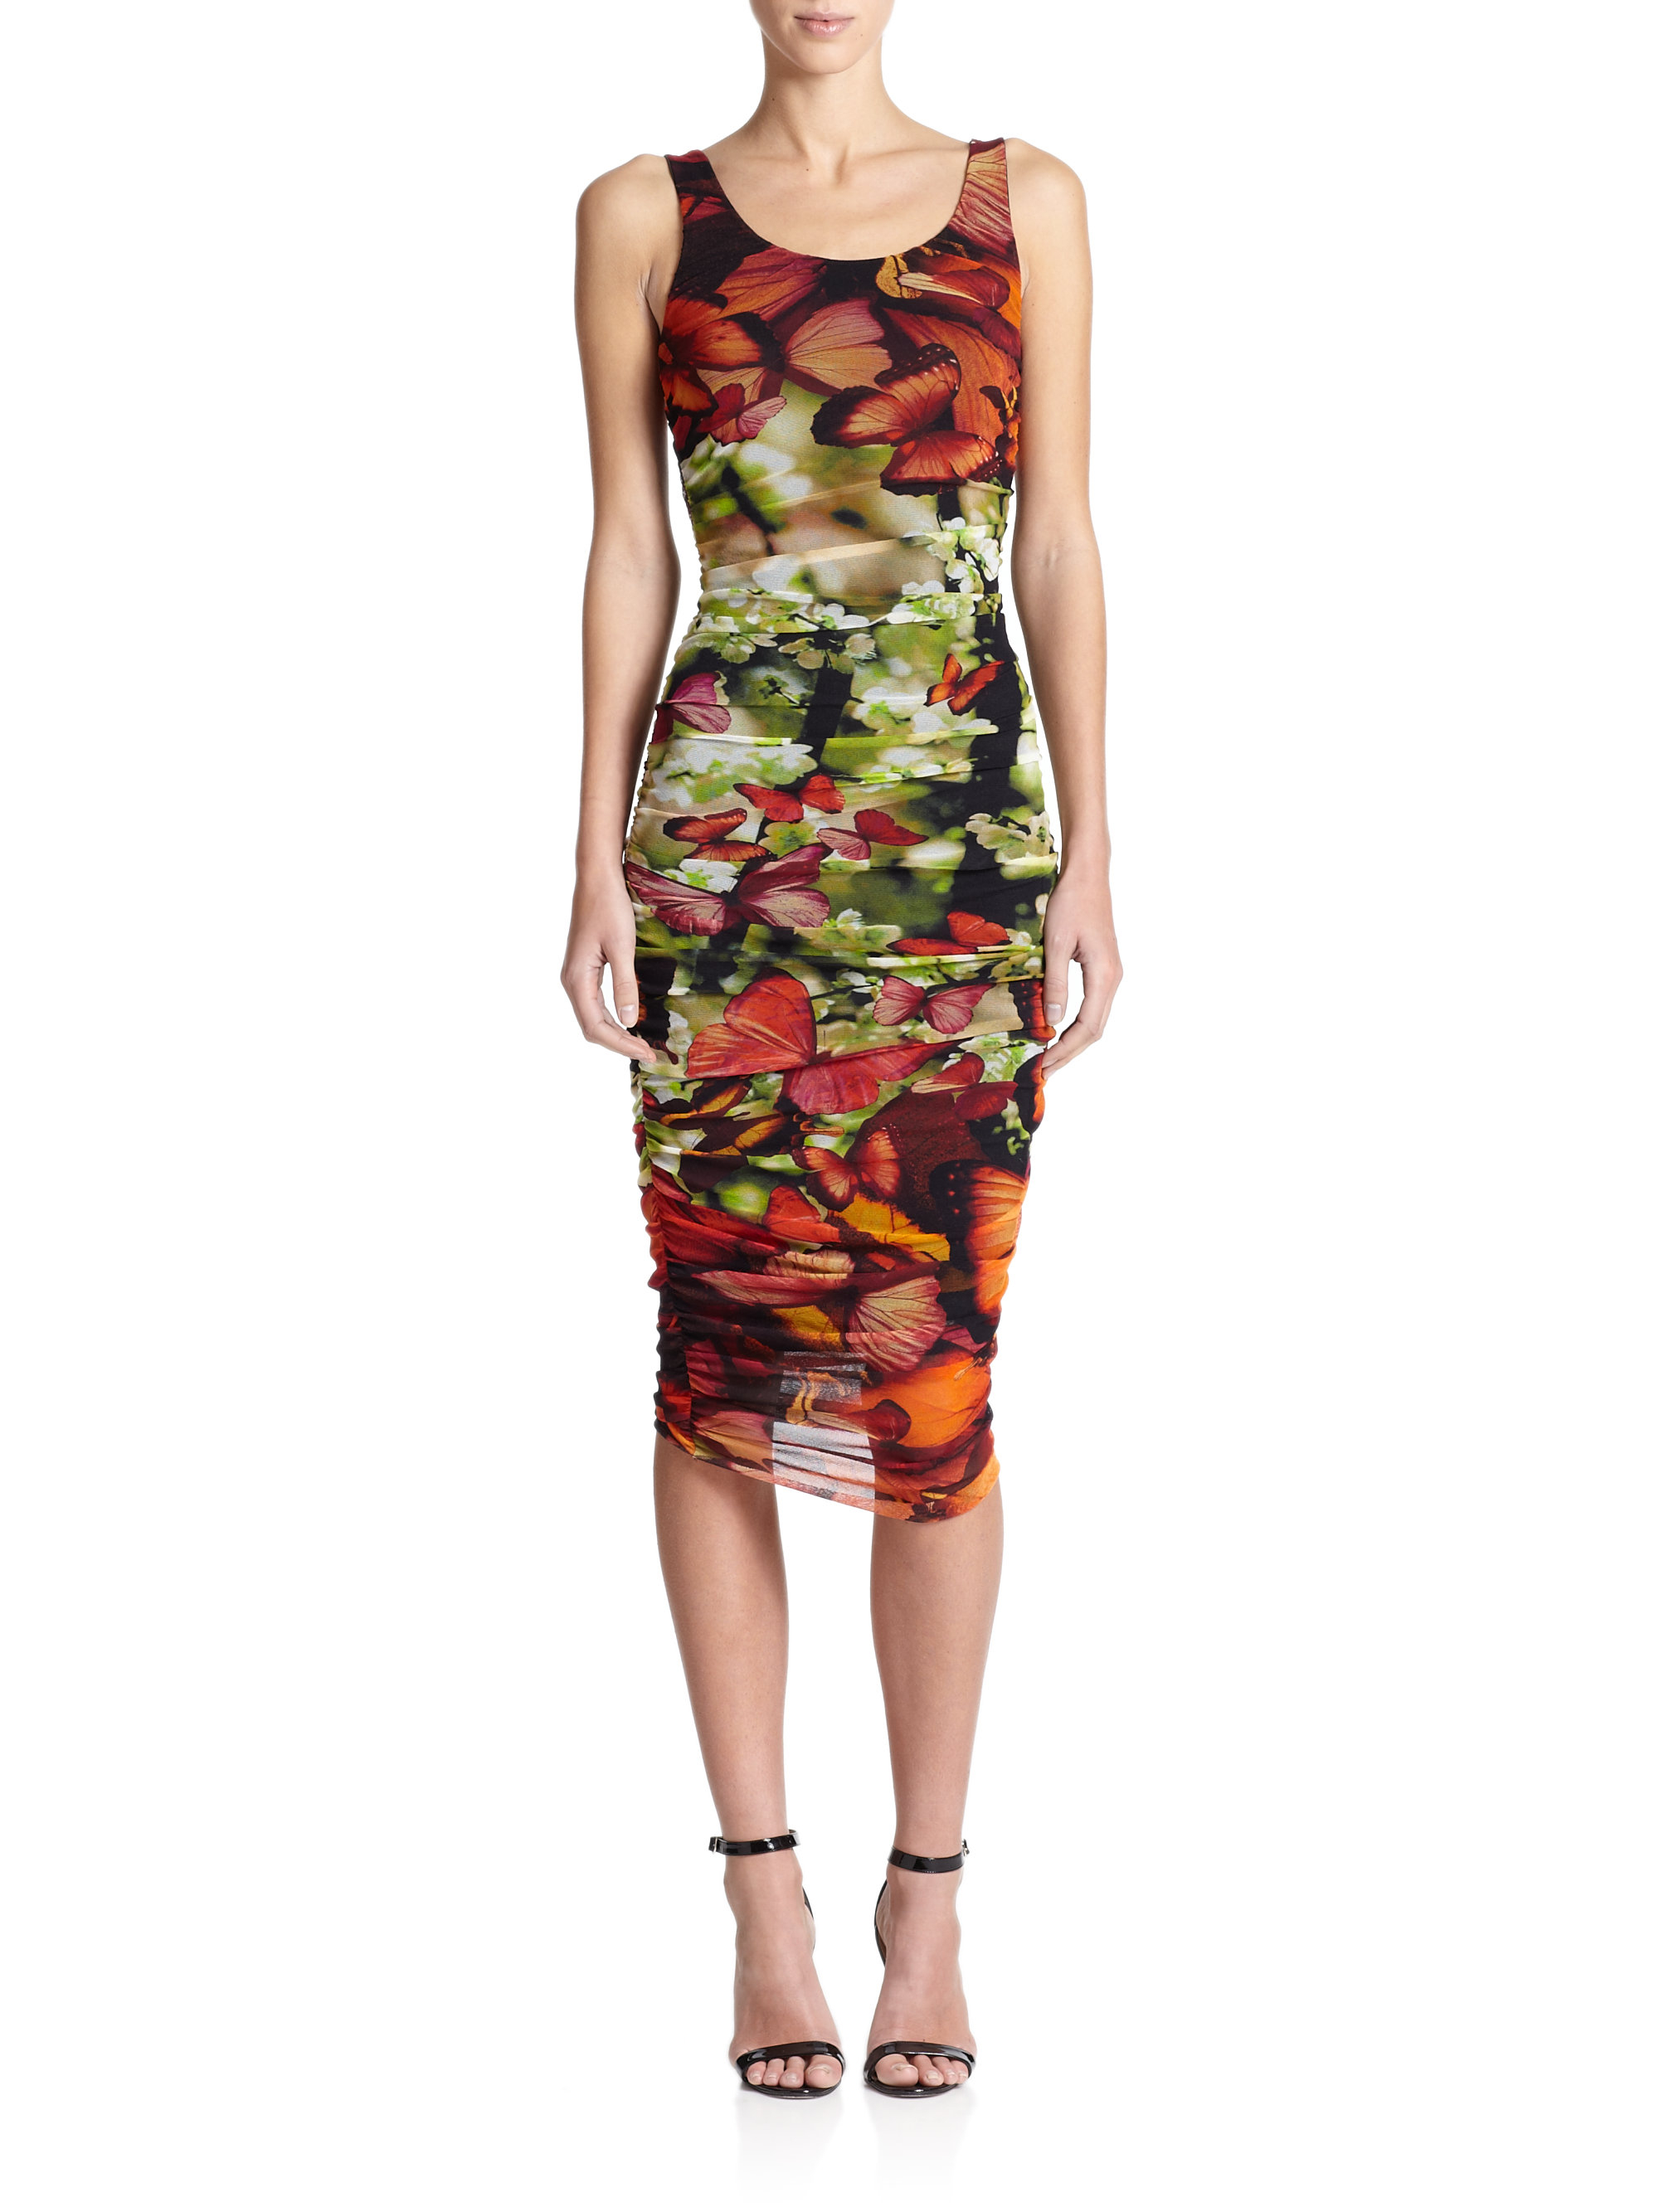 Lyst - Jean Paul Gaultier Digital-Print Ruched Dress